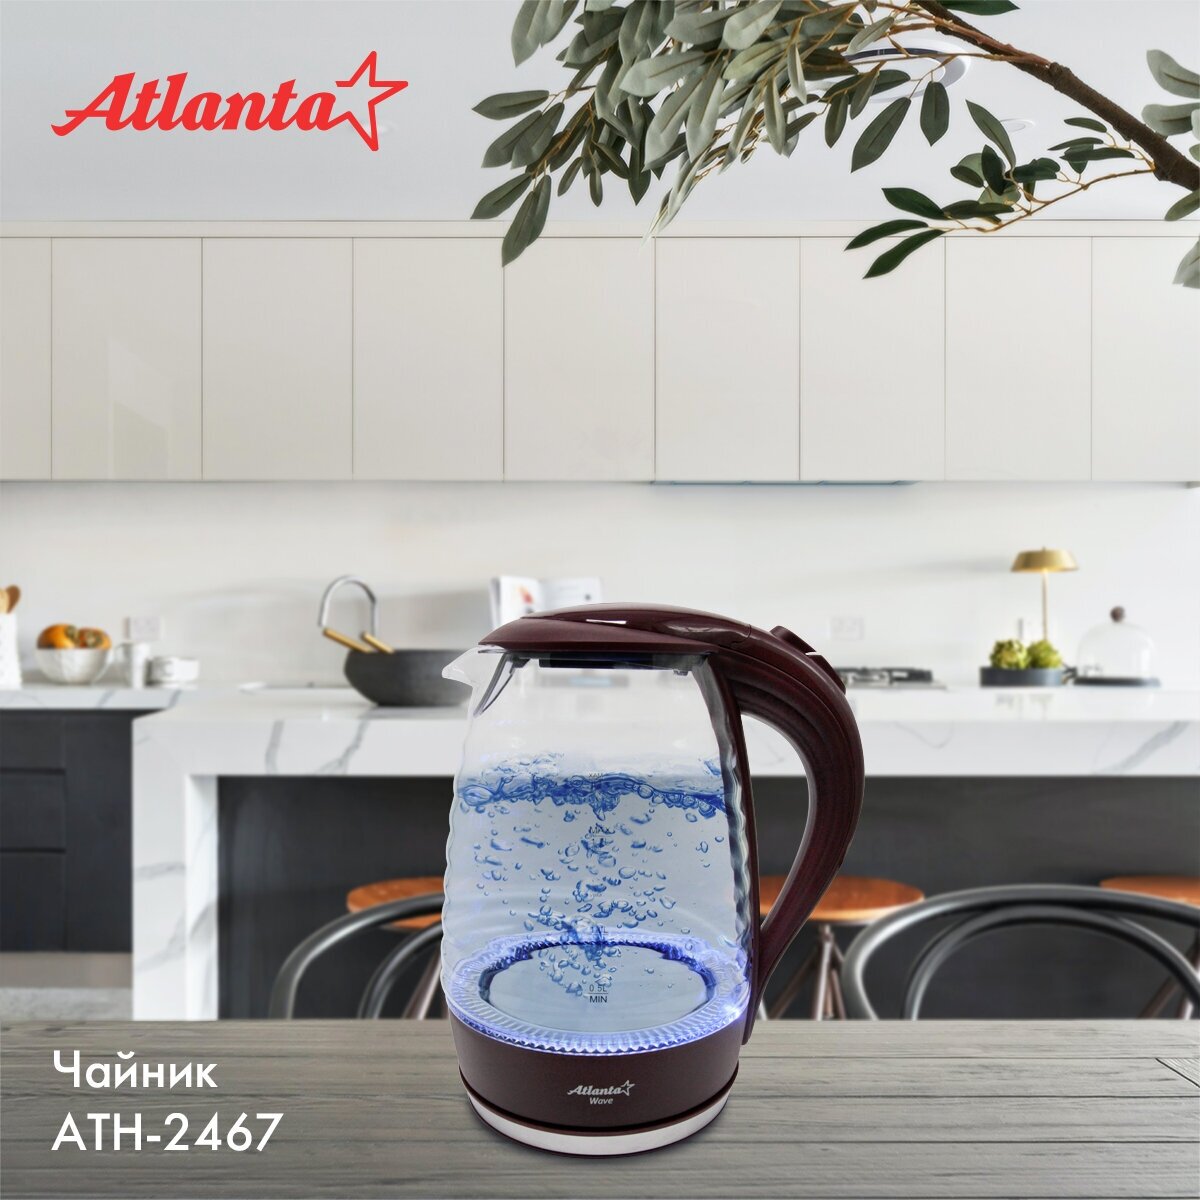 Atlanta ATH-2467 (голубой) - фото №6